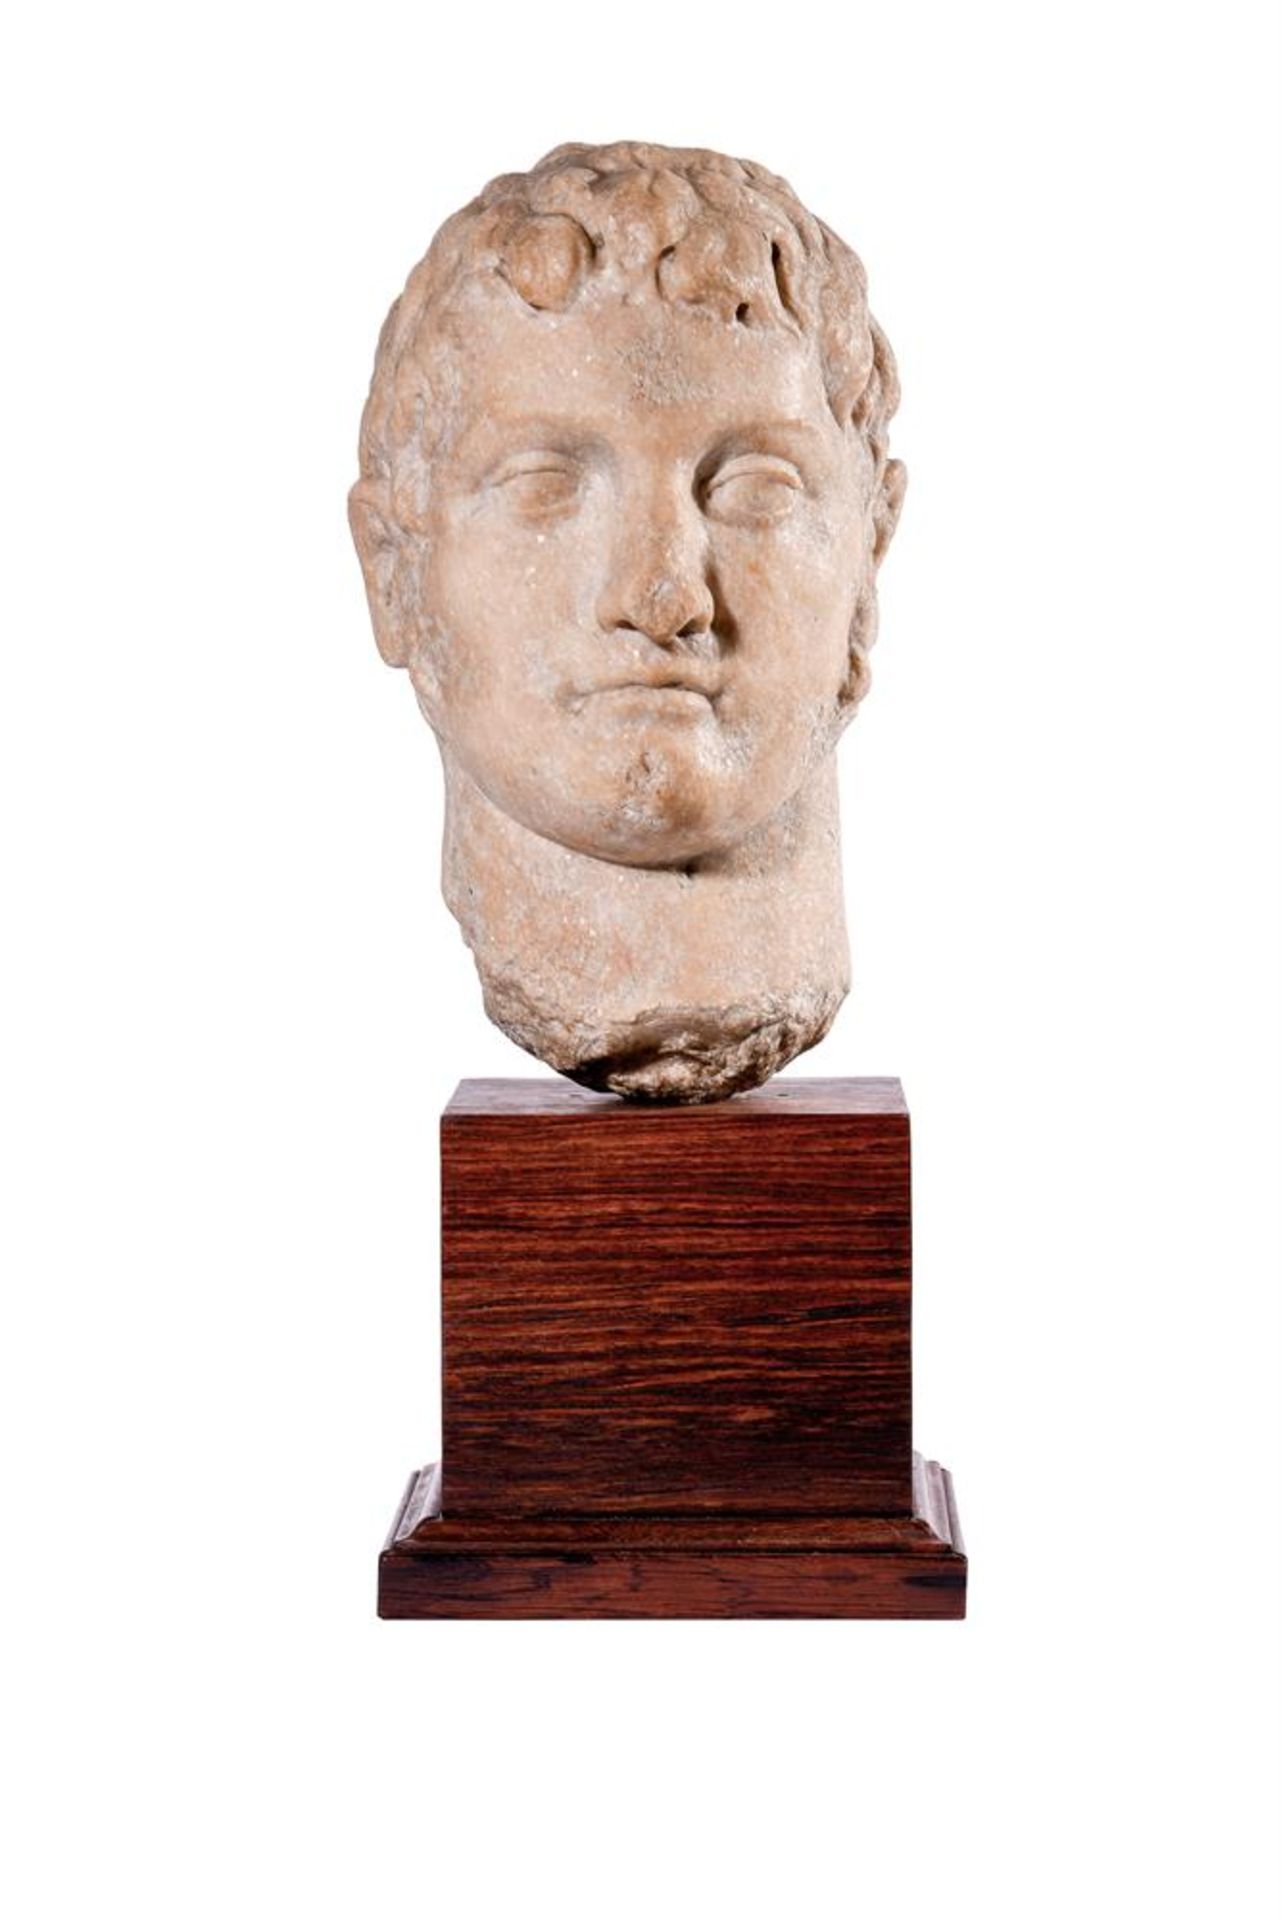 A ROMAN JULIO-CLAUDIAN MARBLE PORTRAIT HEAD OF A MAN, CIRCA 1ST CENTURY A.D. - Image 2 of 3